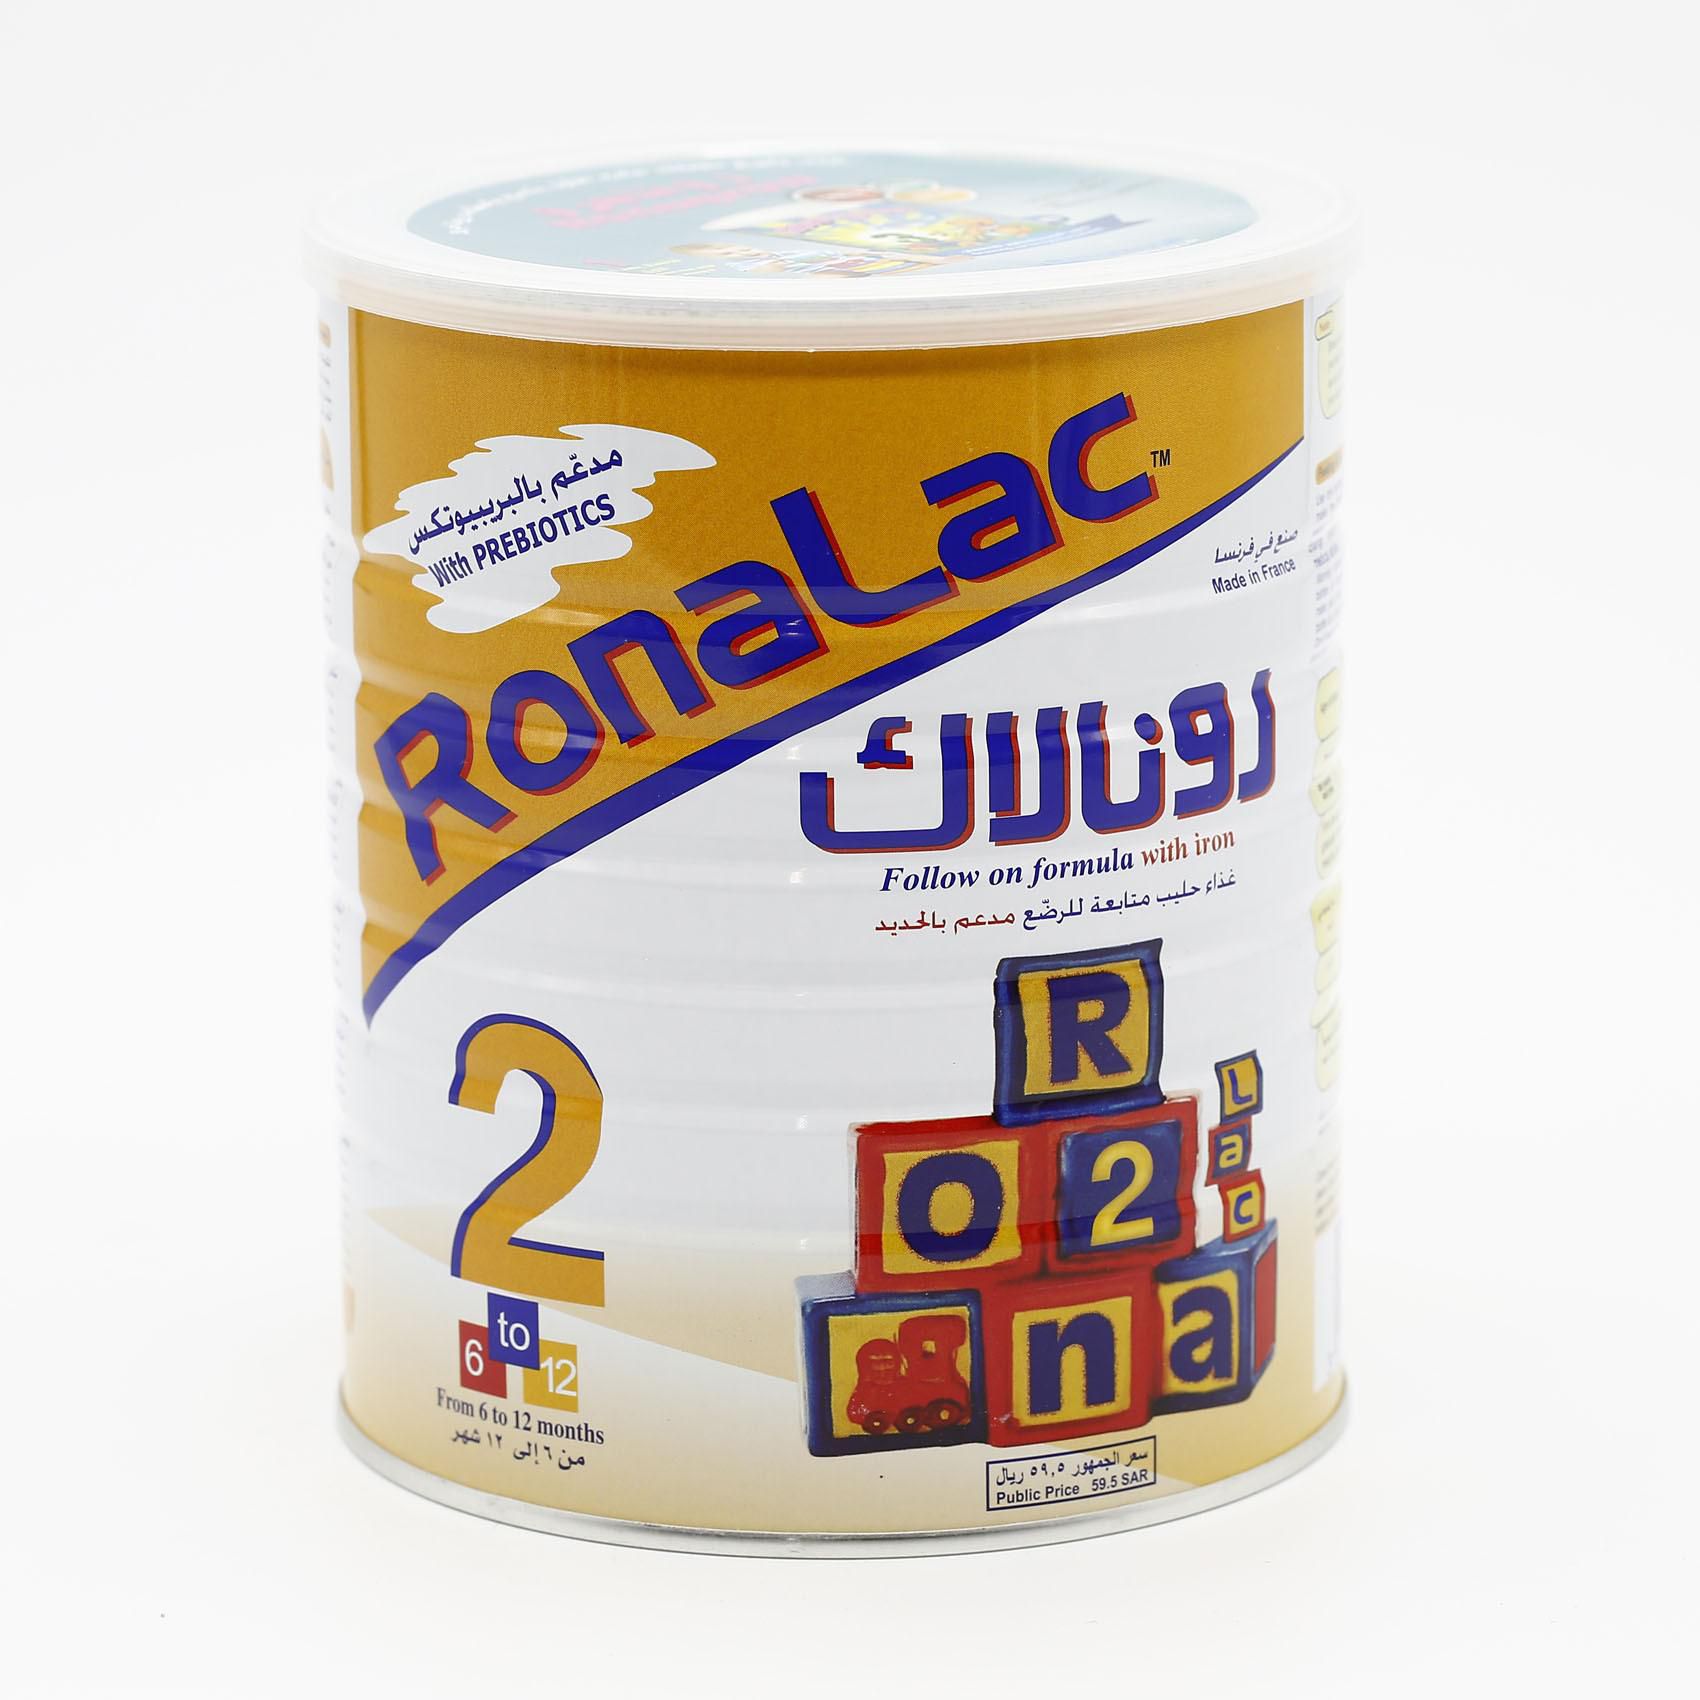 Ronalac Infant Milk Formula 6-12 Months 850 g